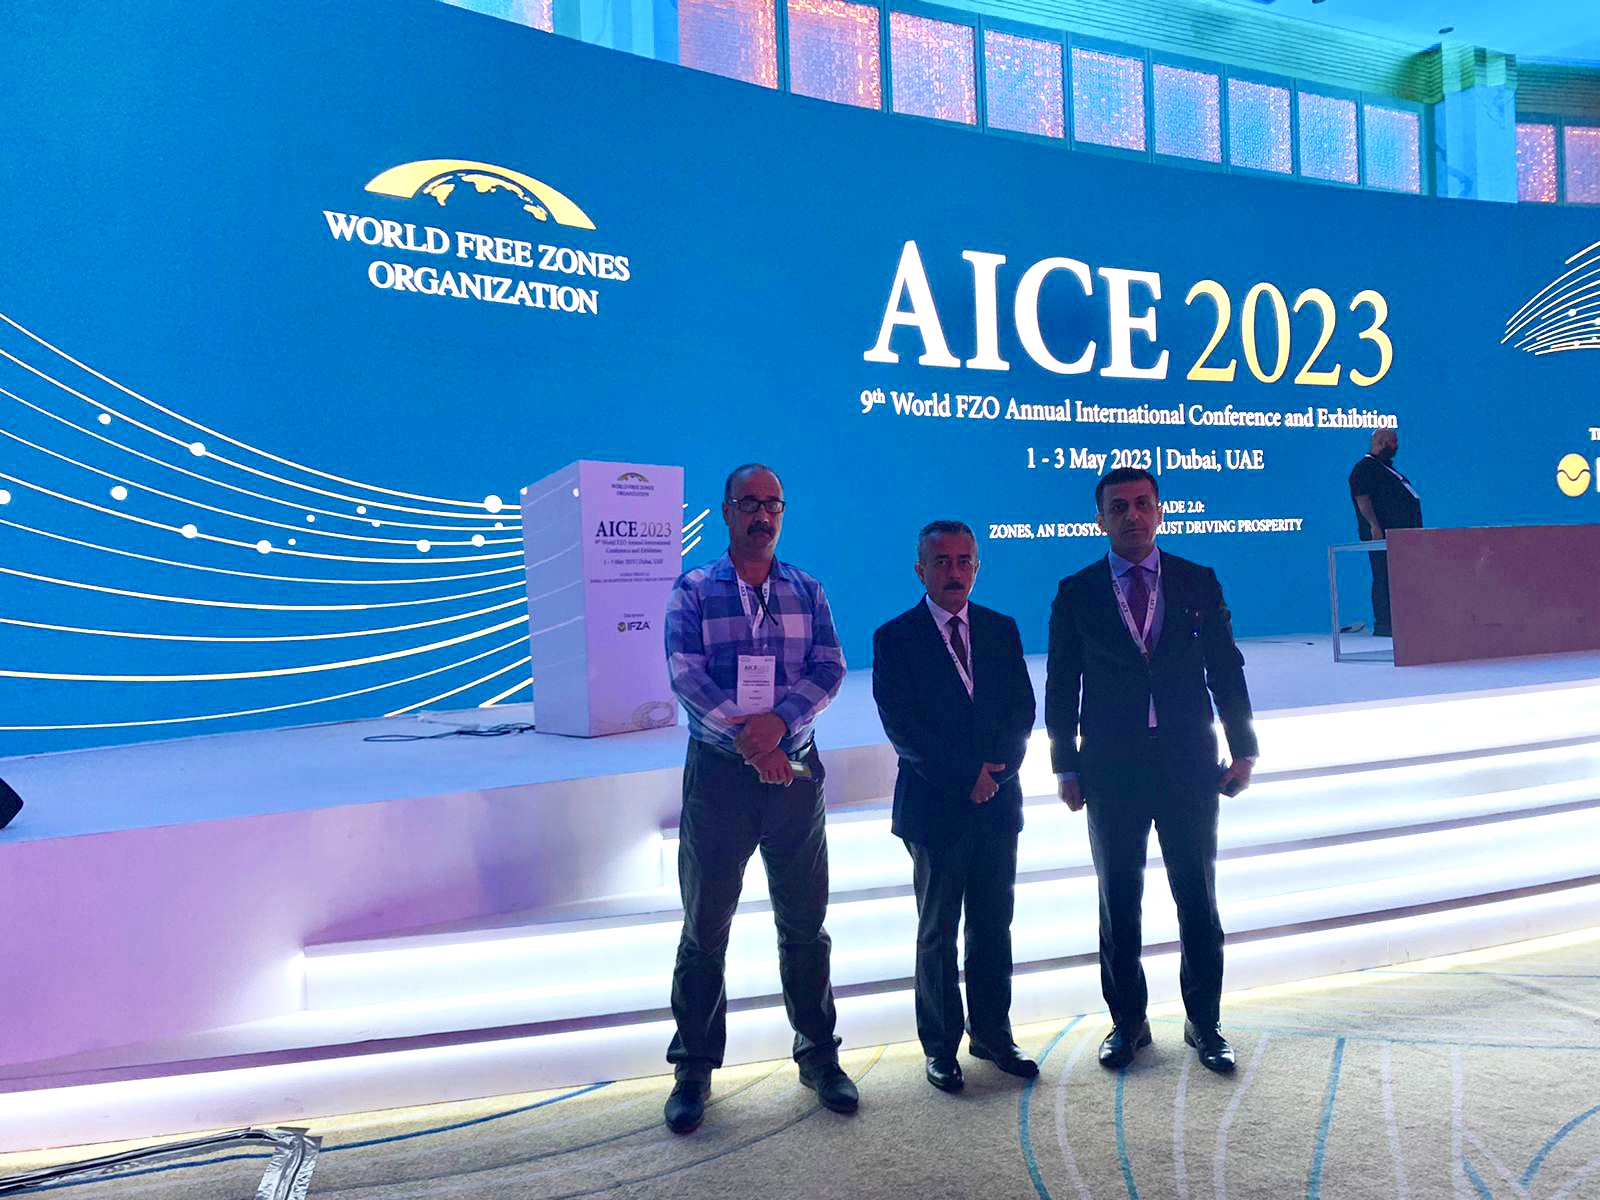 AICE 2023 - the Annual International Conference & Exhibition in Dubai